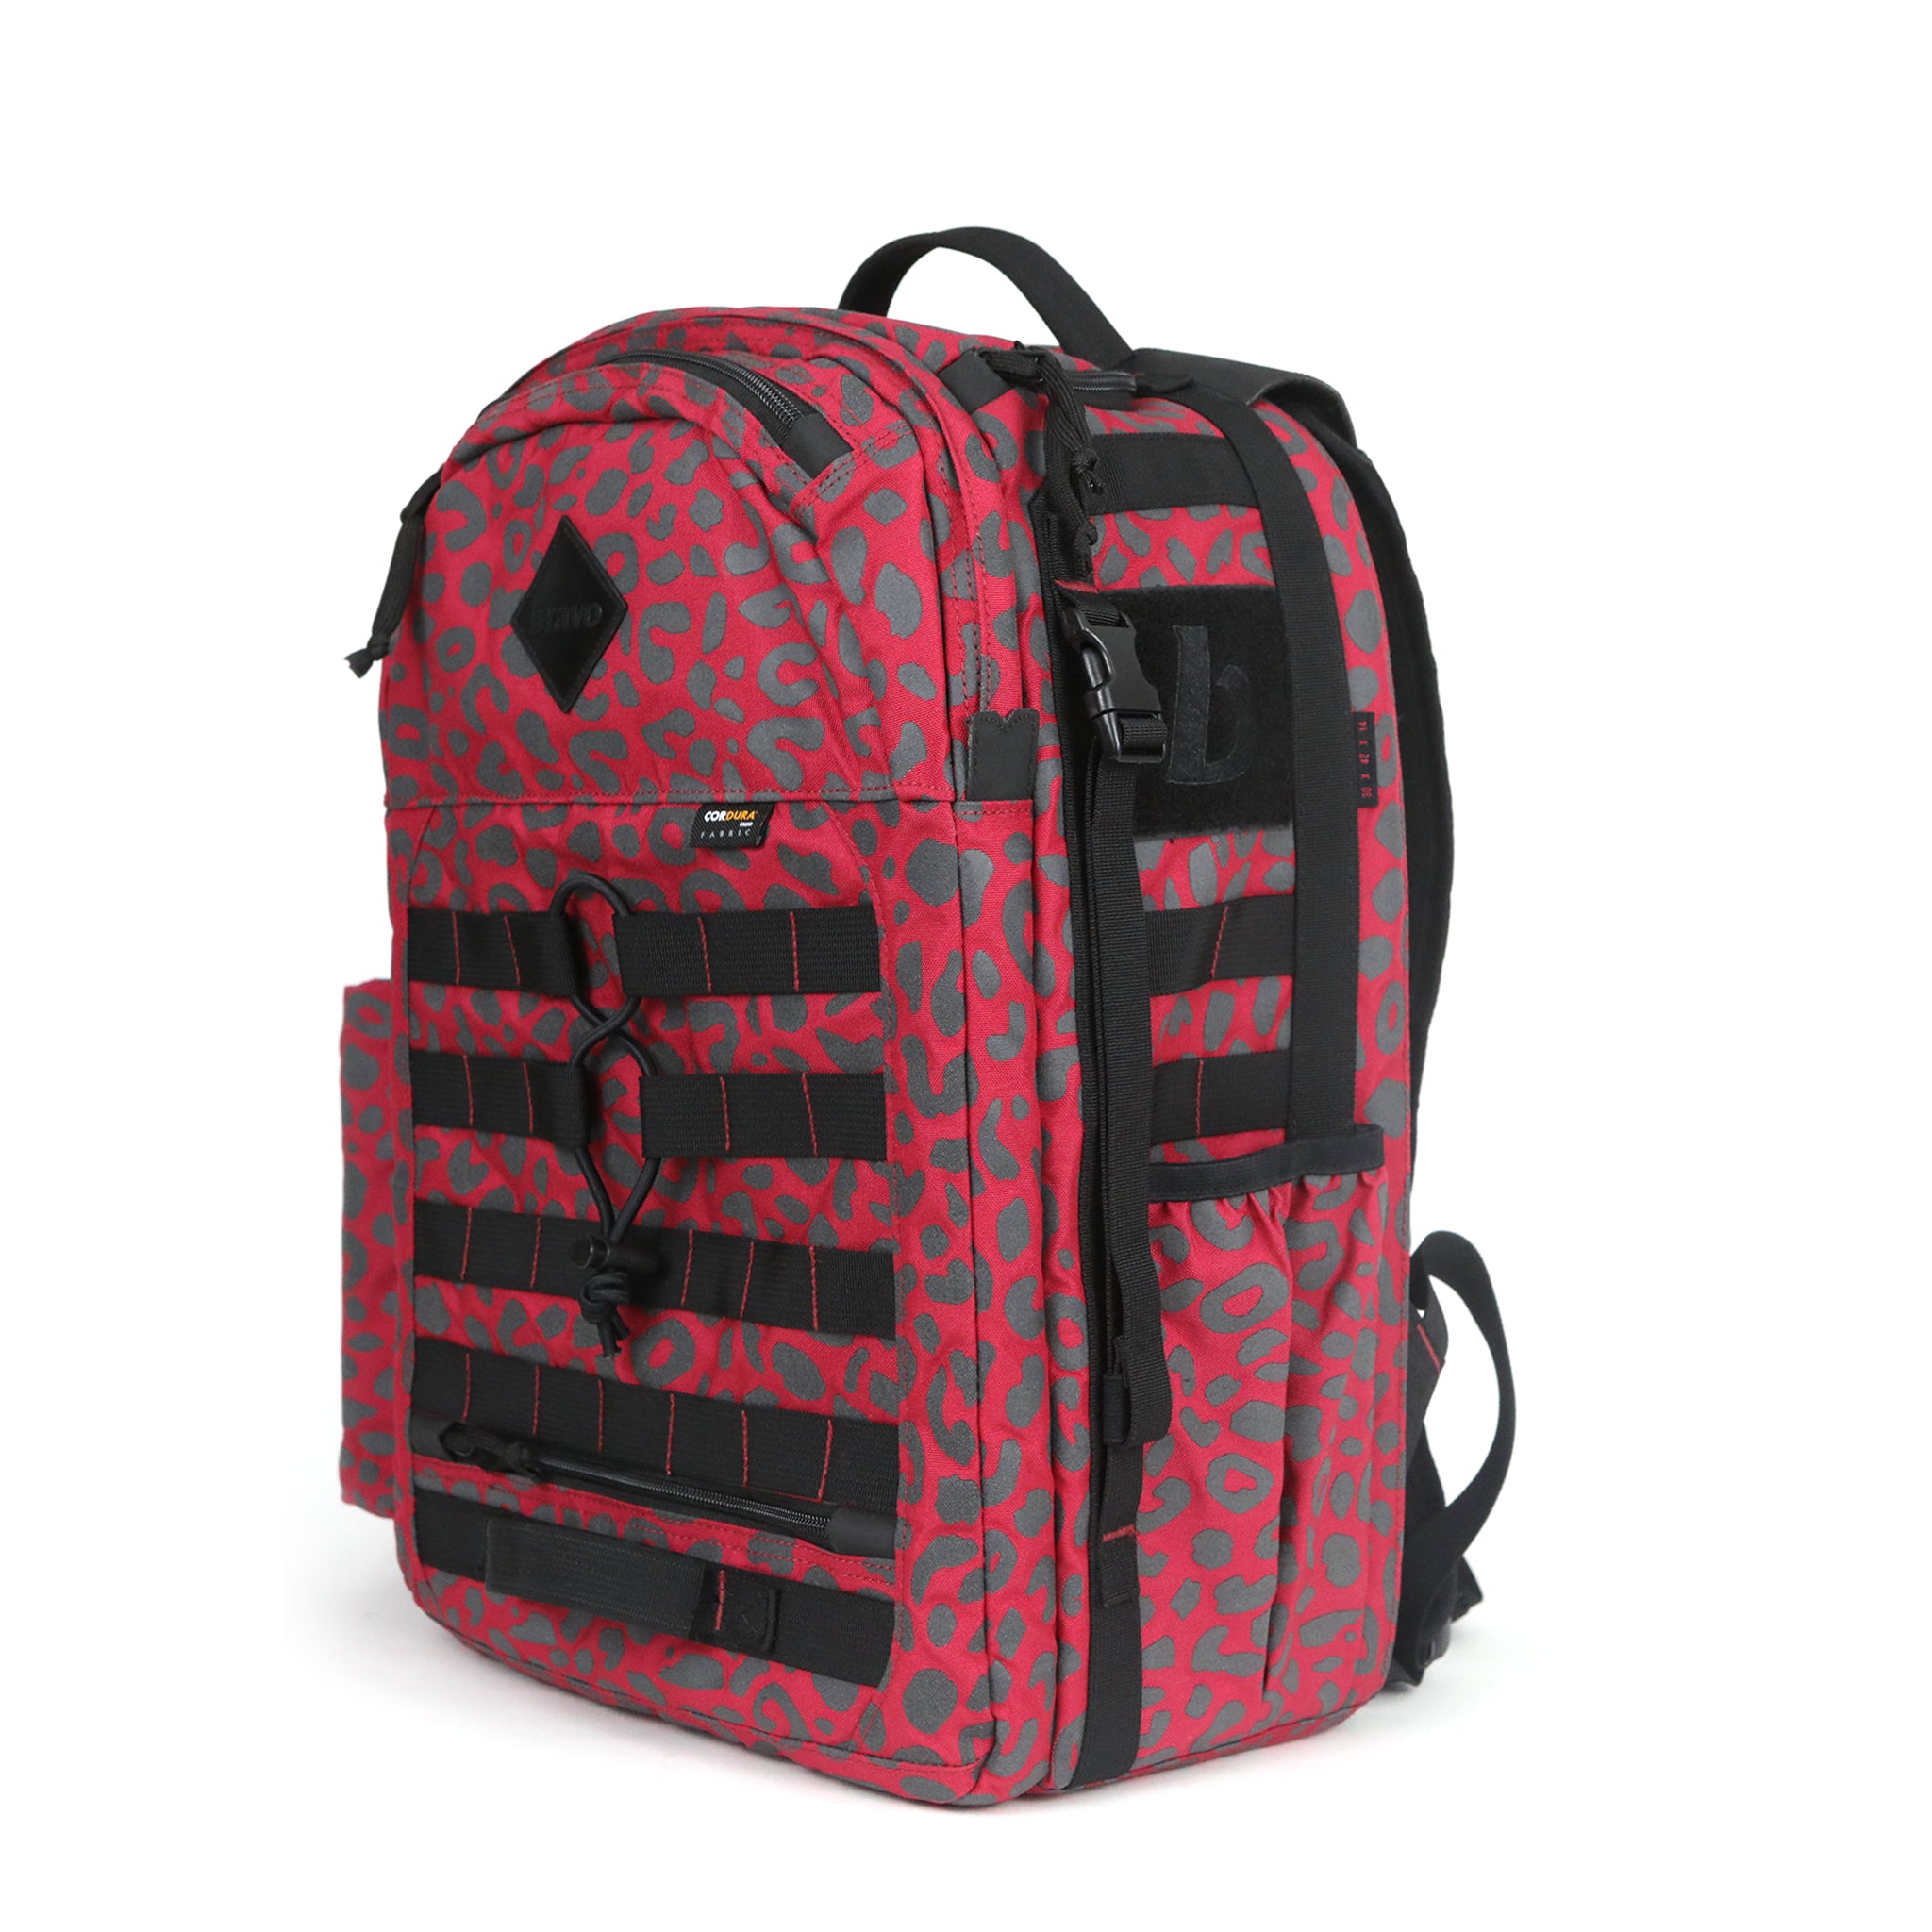 Delta Backpack – Believe Accessories Inc.